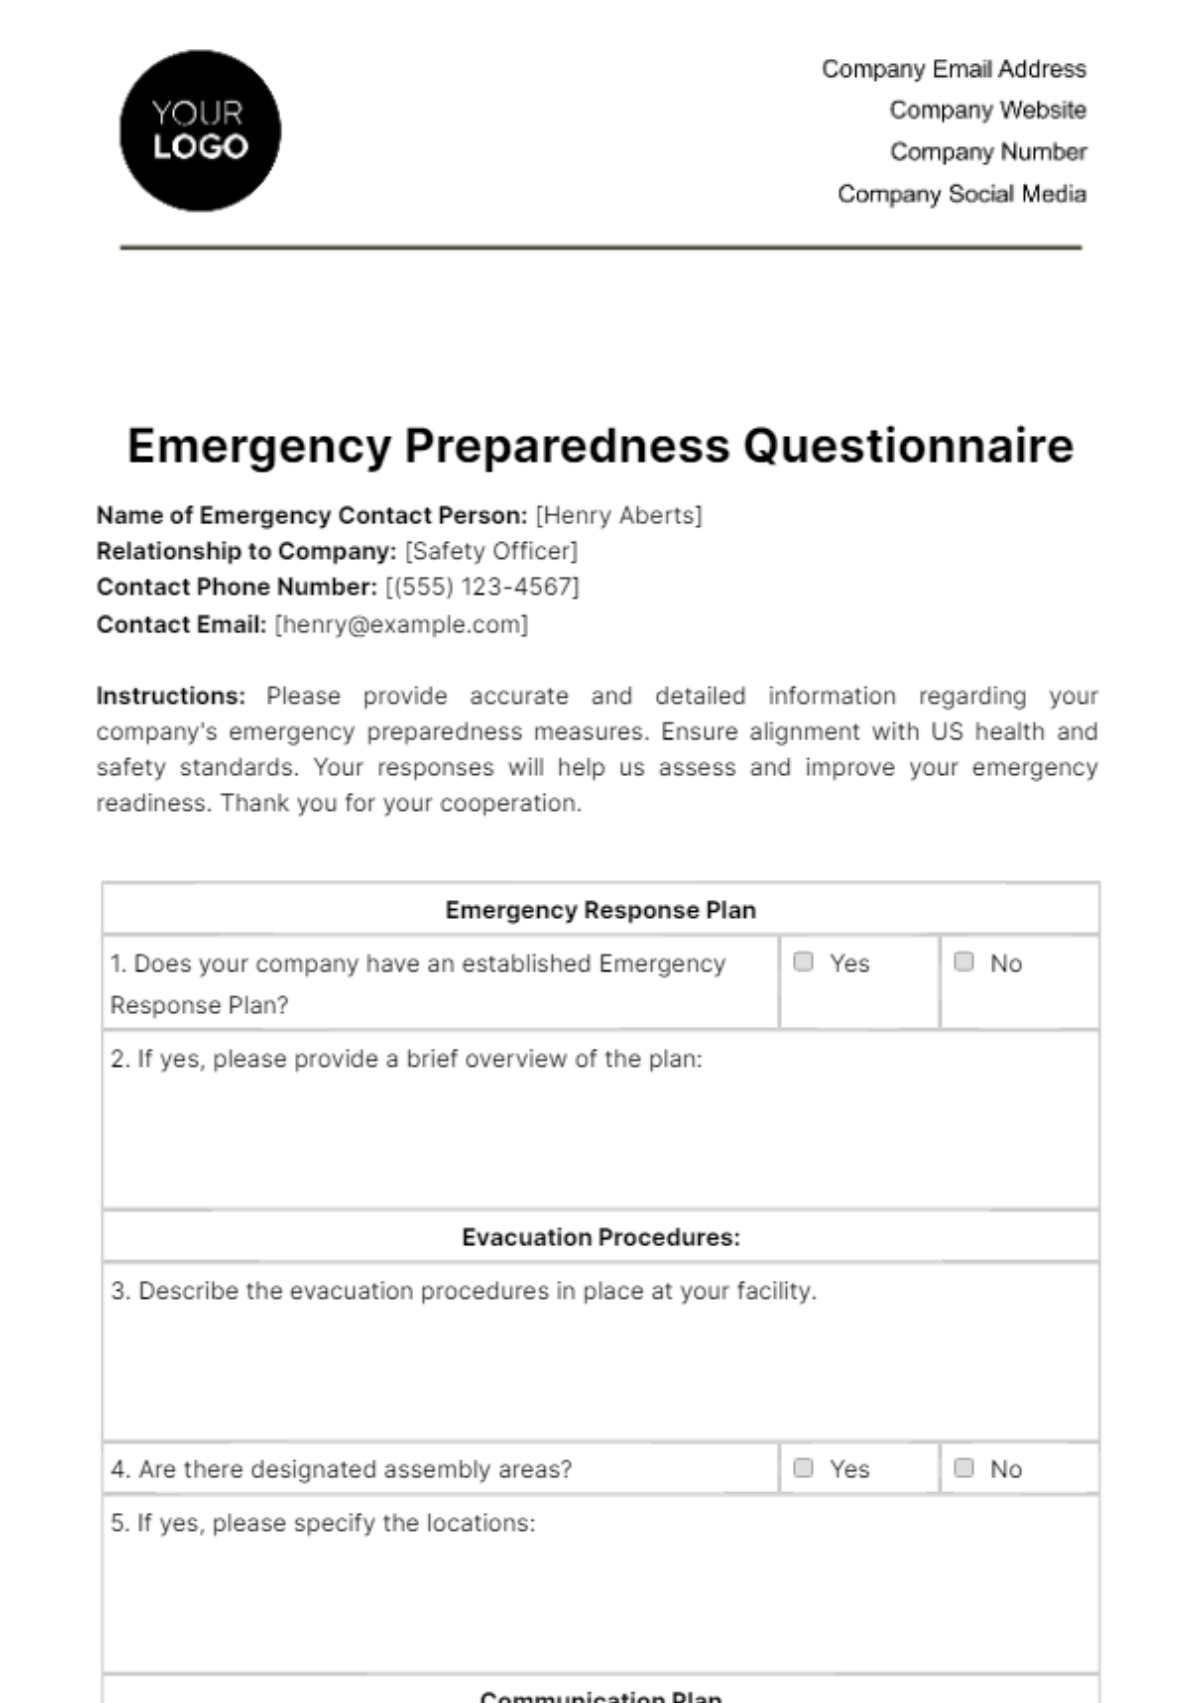 Emergency Preparedness Questionnaire Template